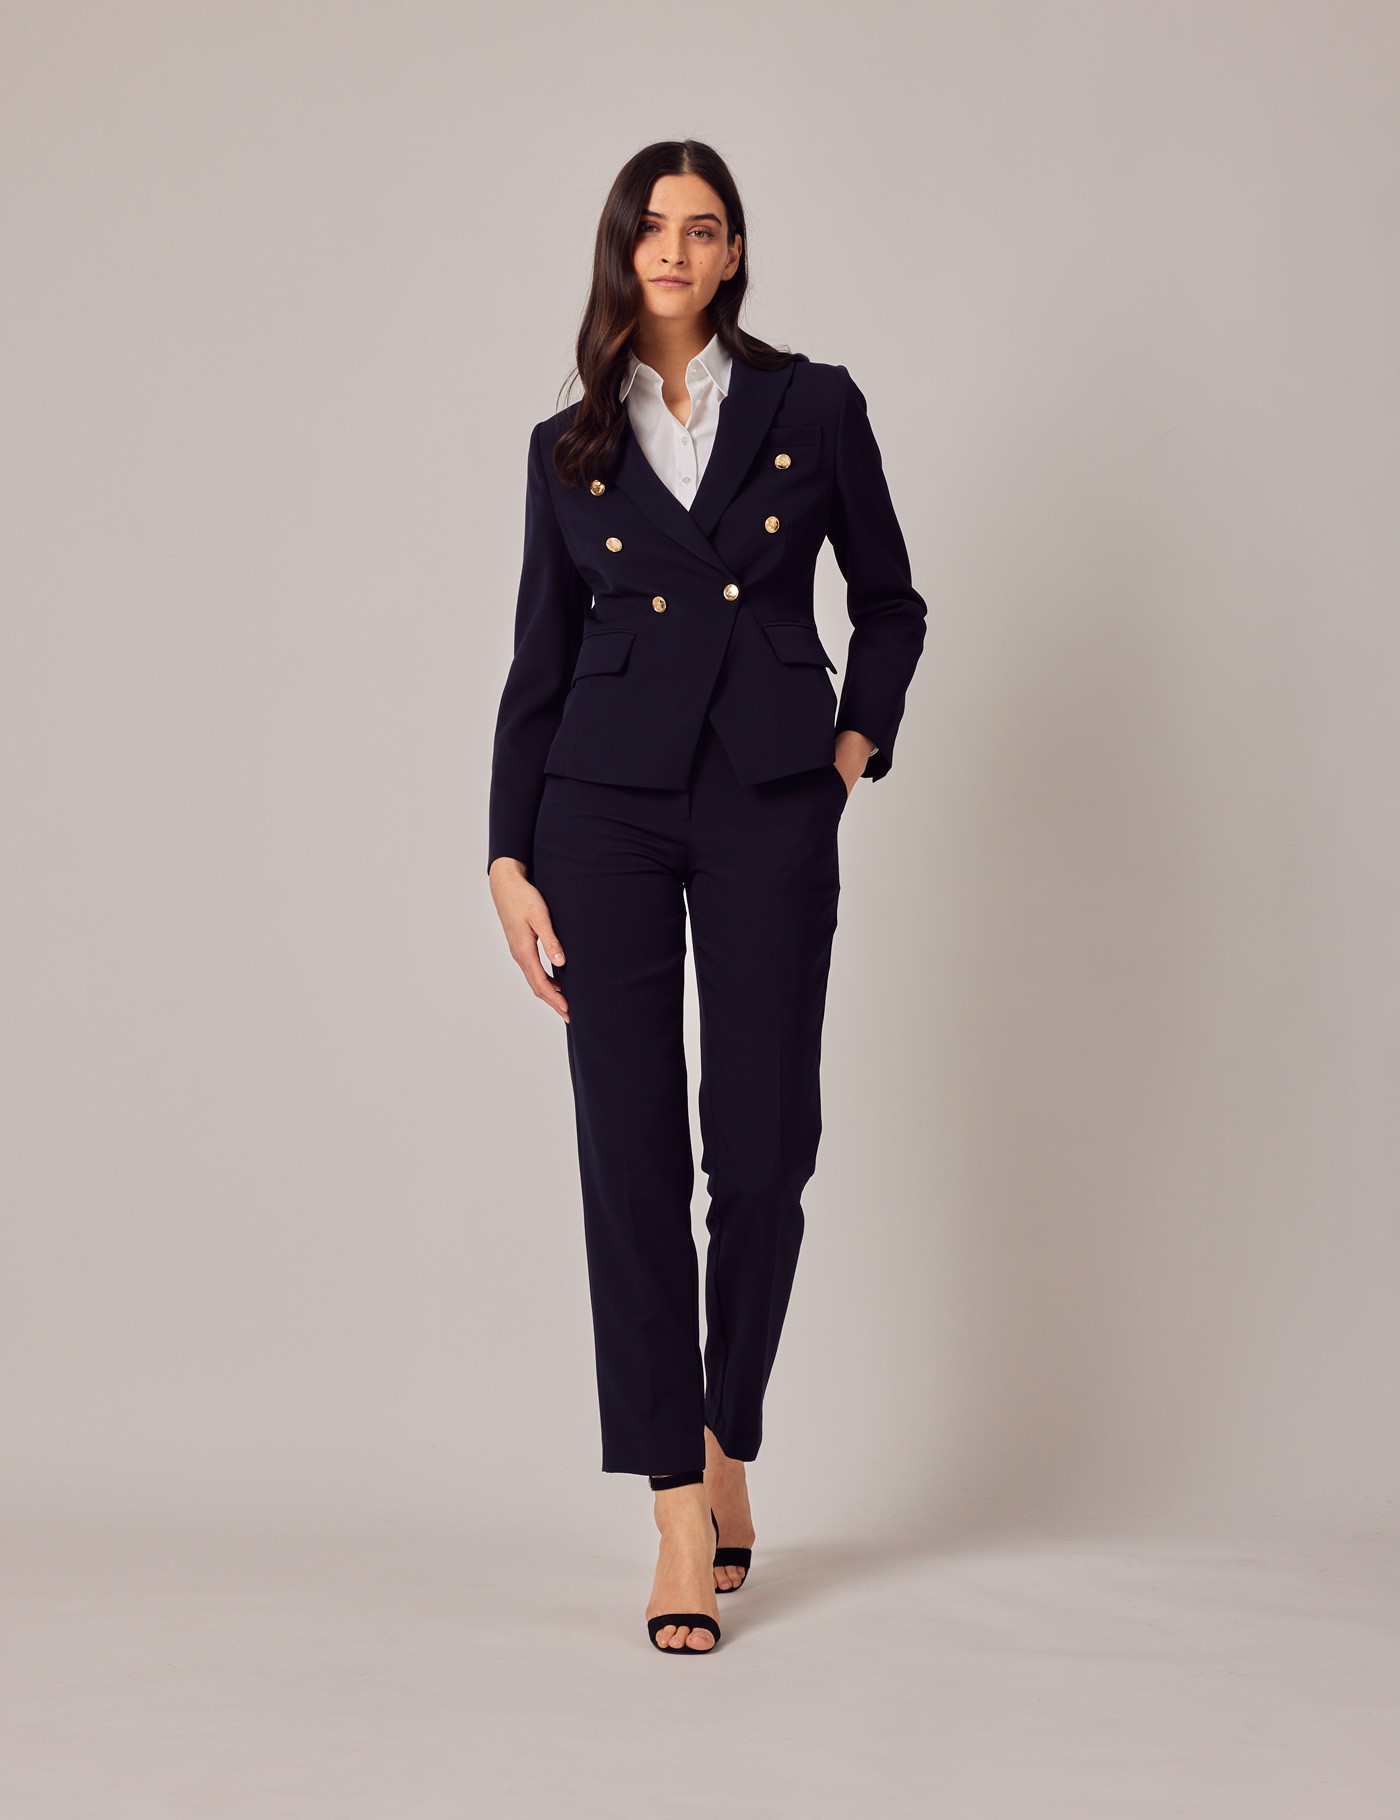 Office Ladies Suits Blazer With Pants Formal Work Trouser Suit Solid Black  Navy Blue Business Suite 2 Piece Set Fashion Outfits  Pant Suits   AliExpress